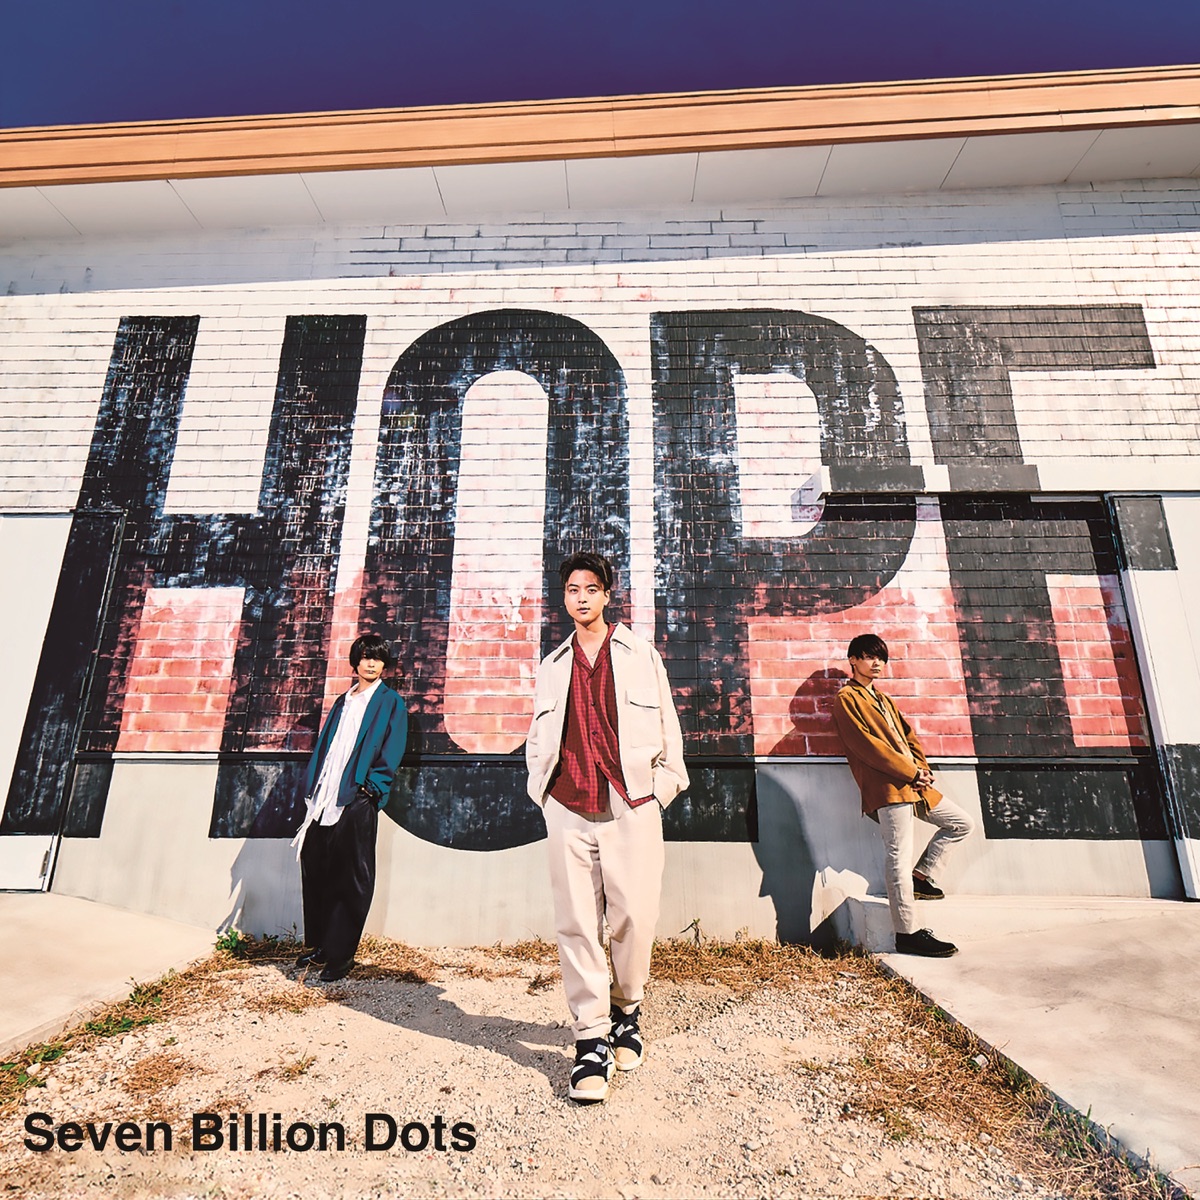 『Seven Billion Dots - What Was That!? 歌詞』収録の『HOPE』ジャケット